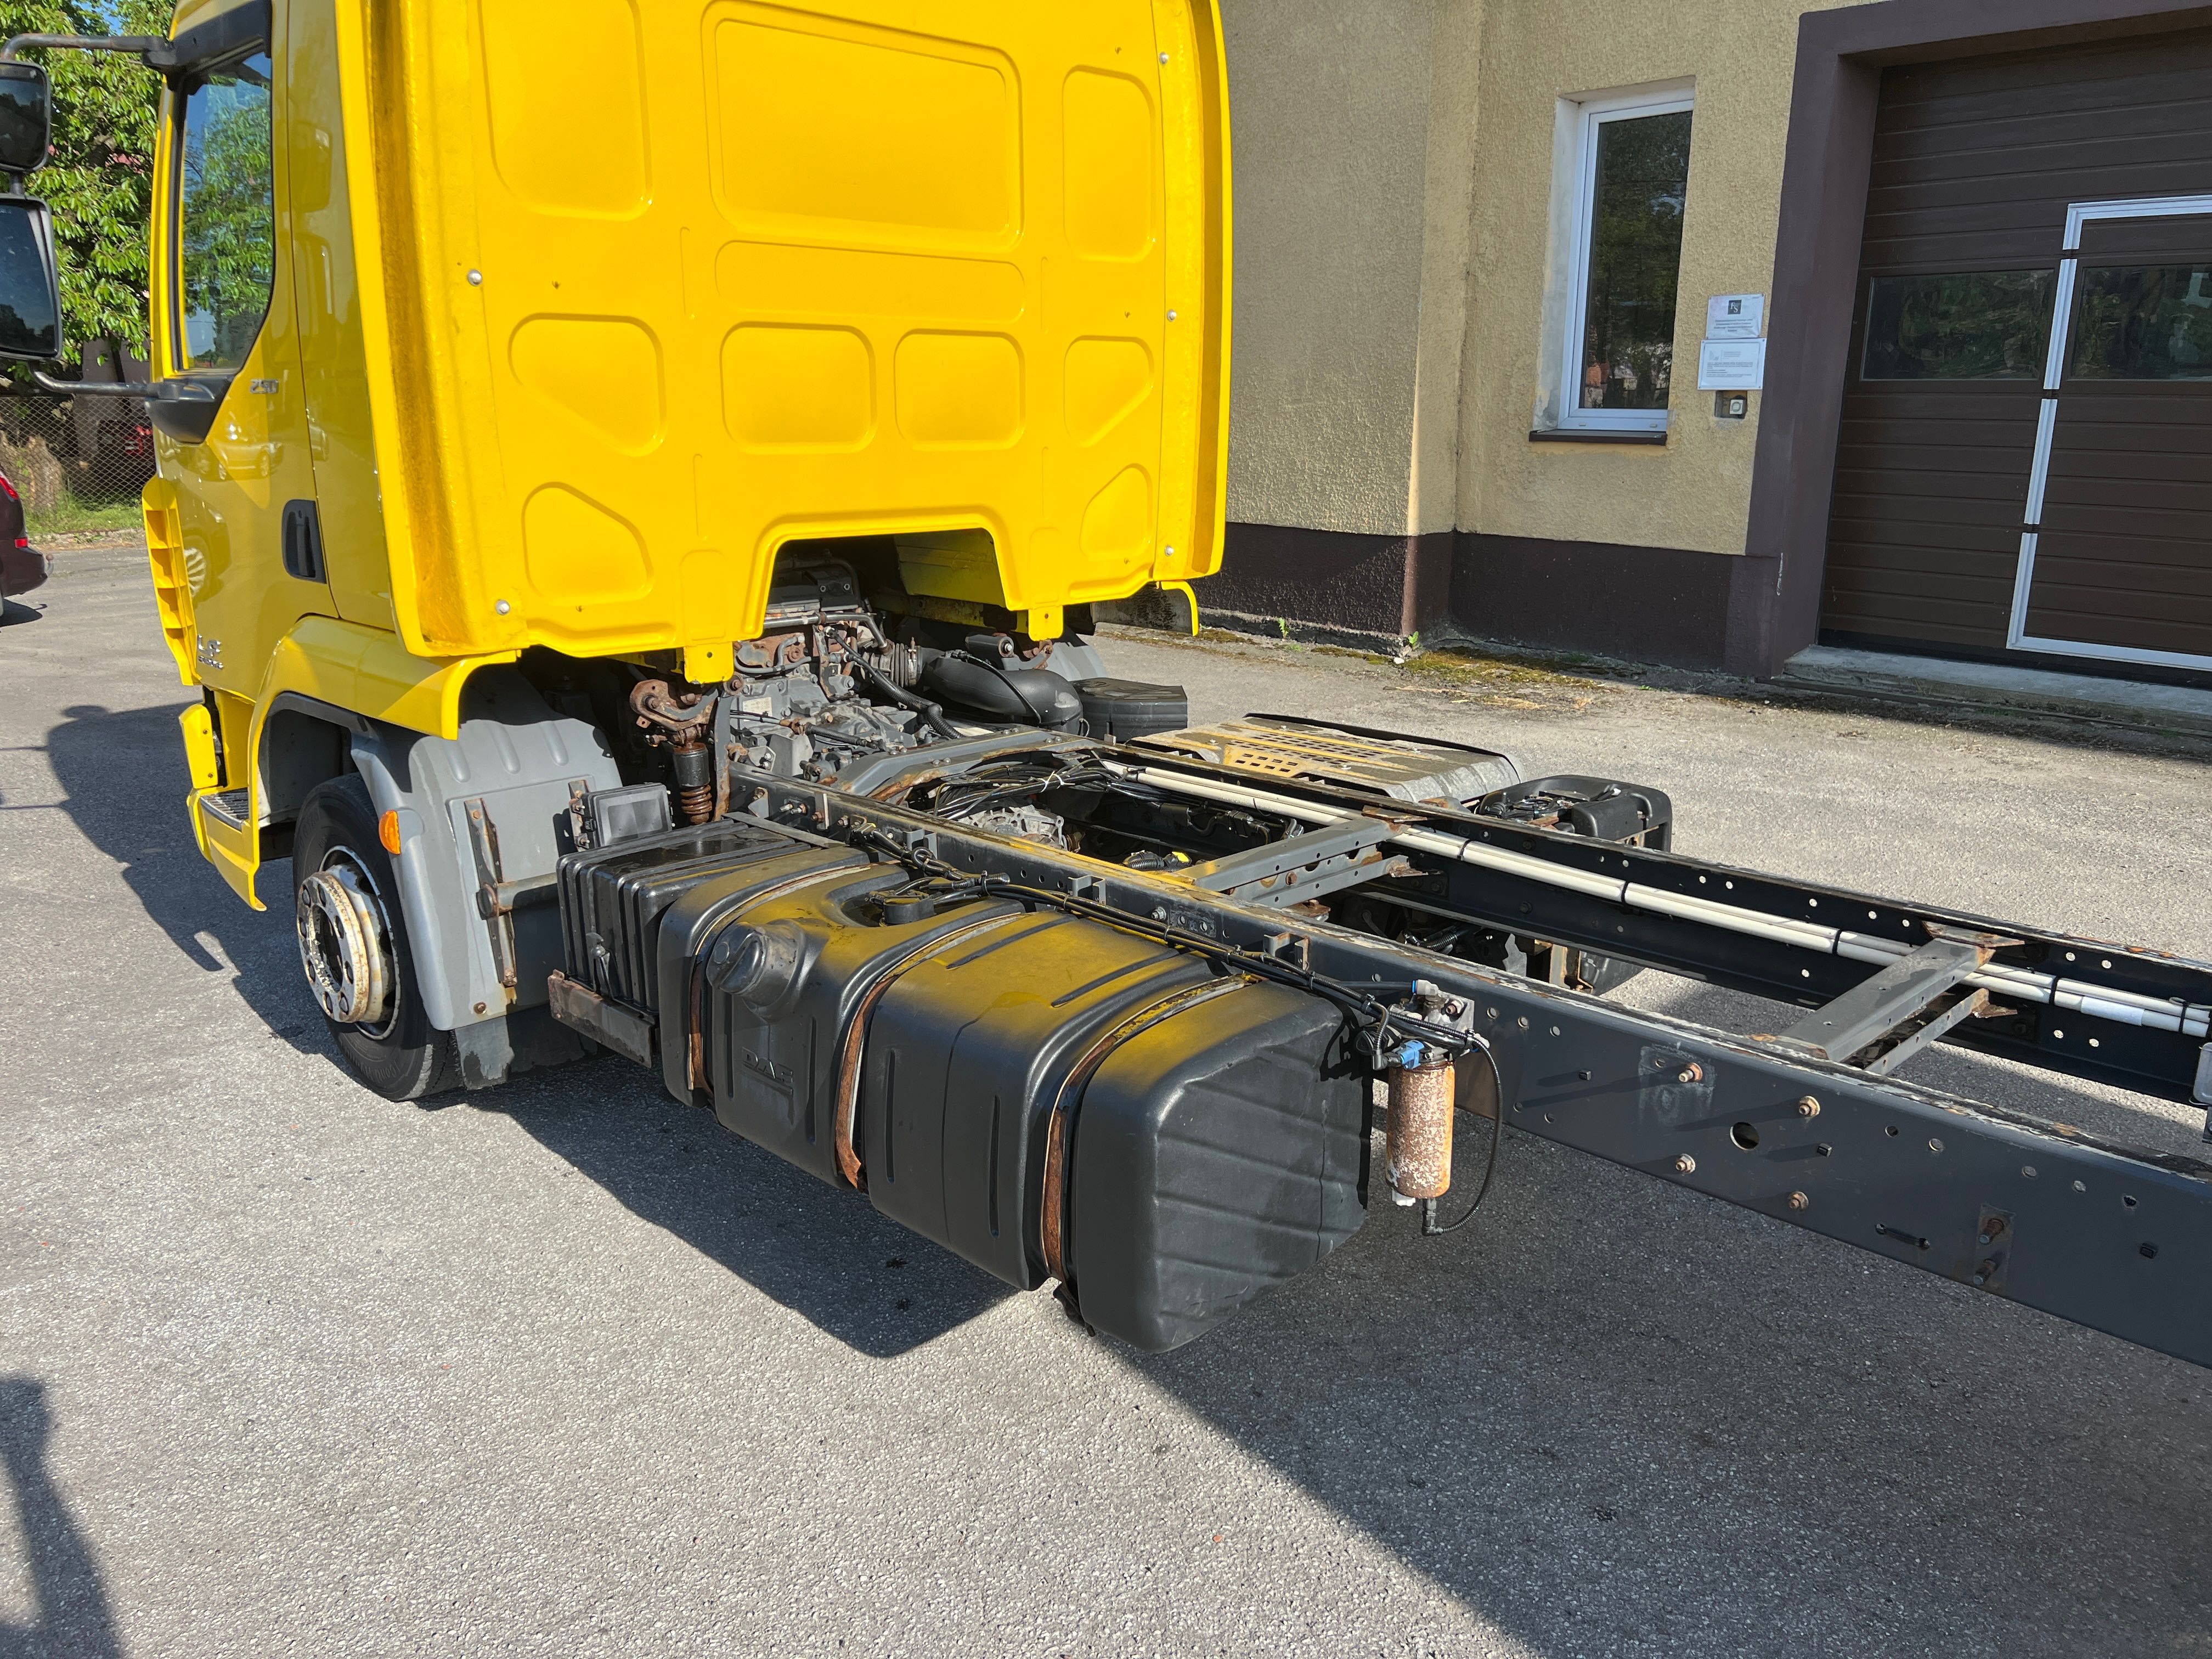 DAF LF 250 euro.6 pomoc drogowa autolaweta kontener